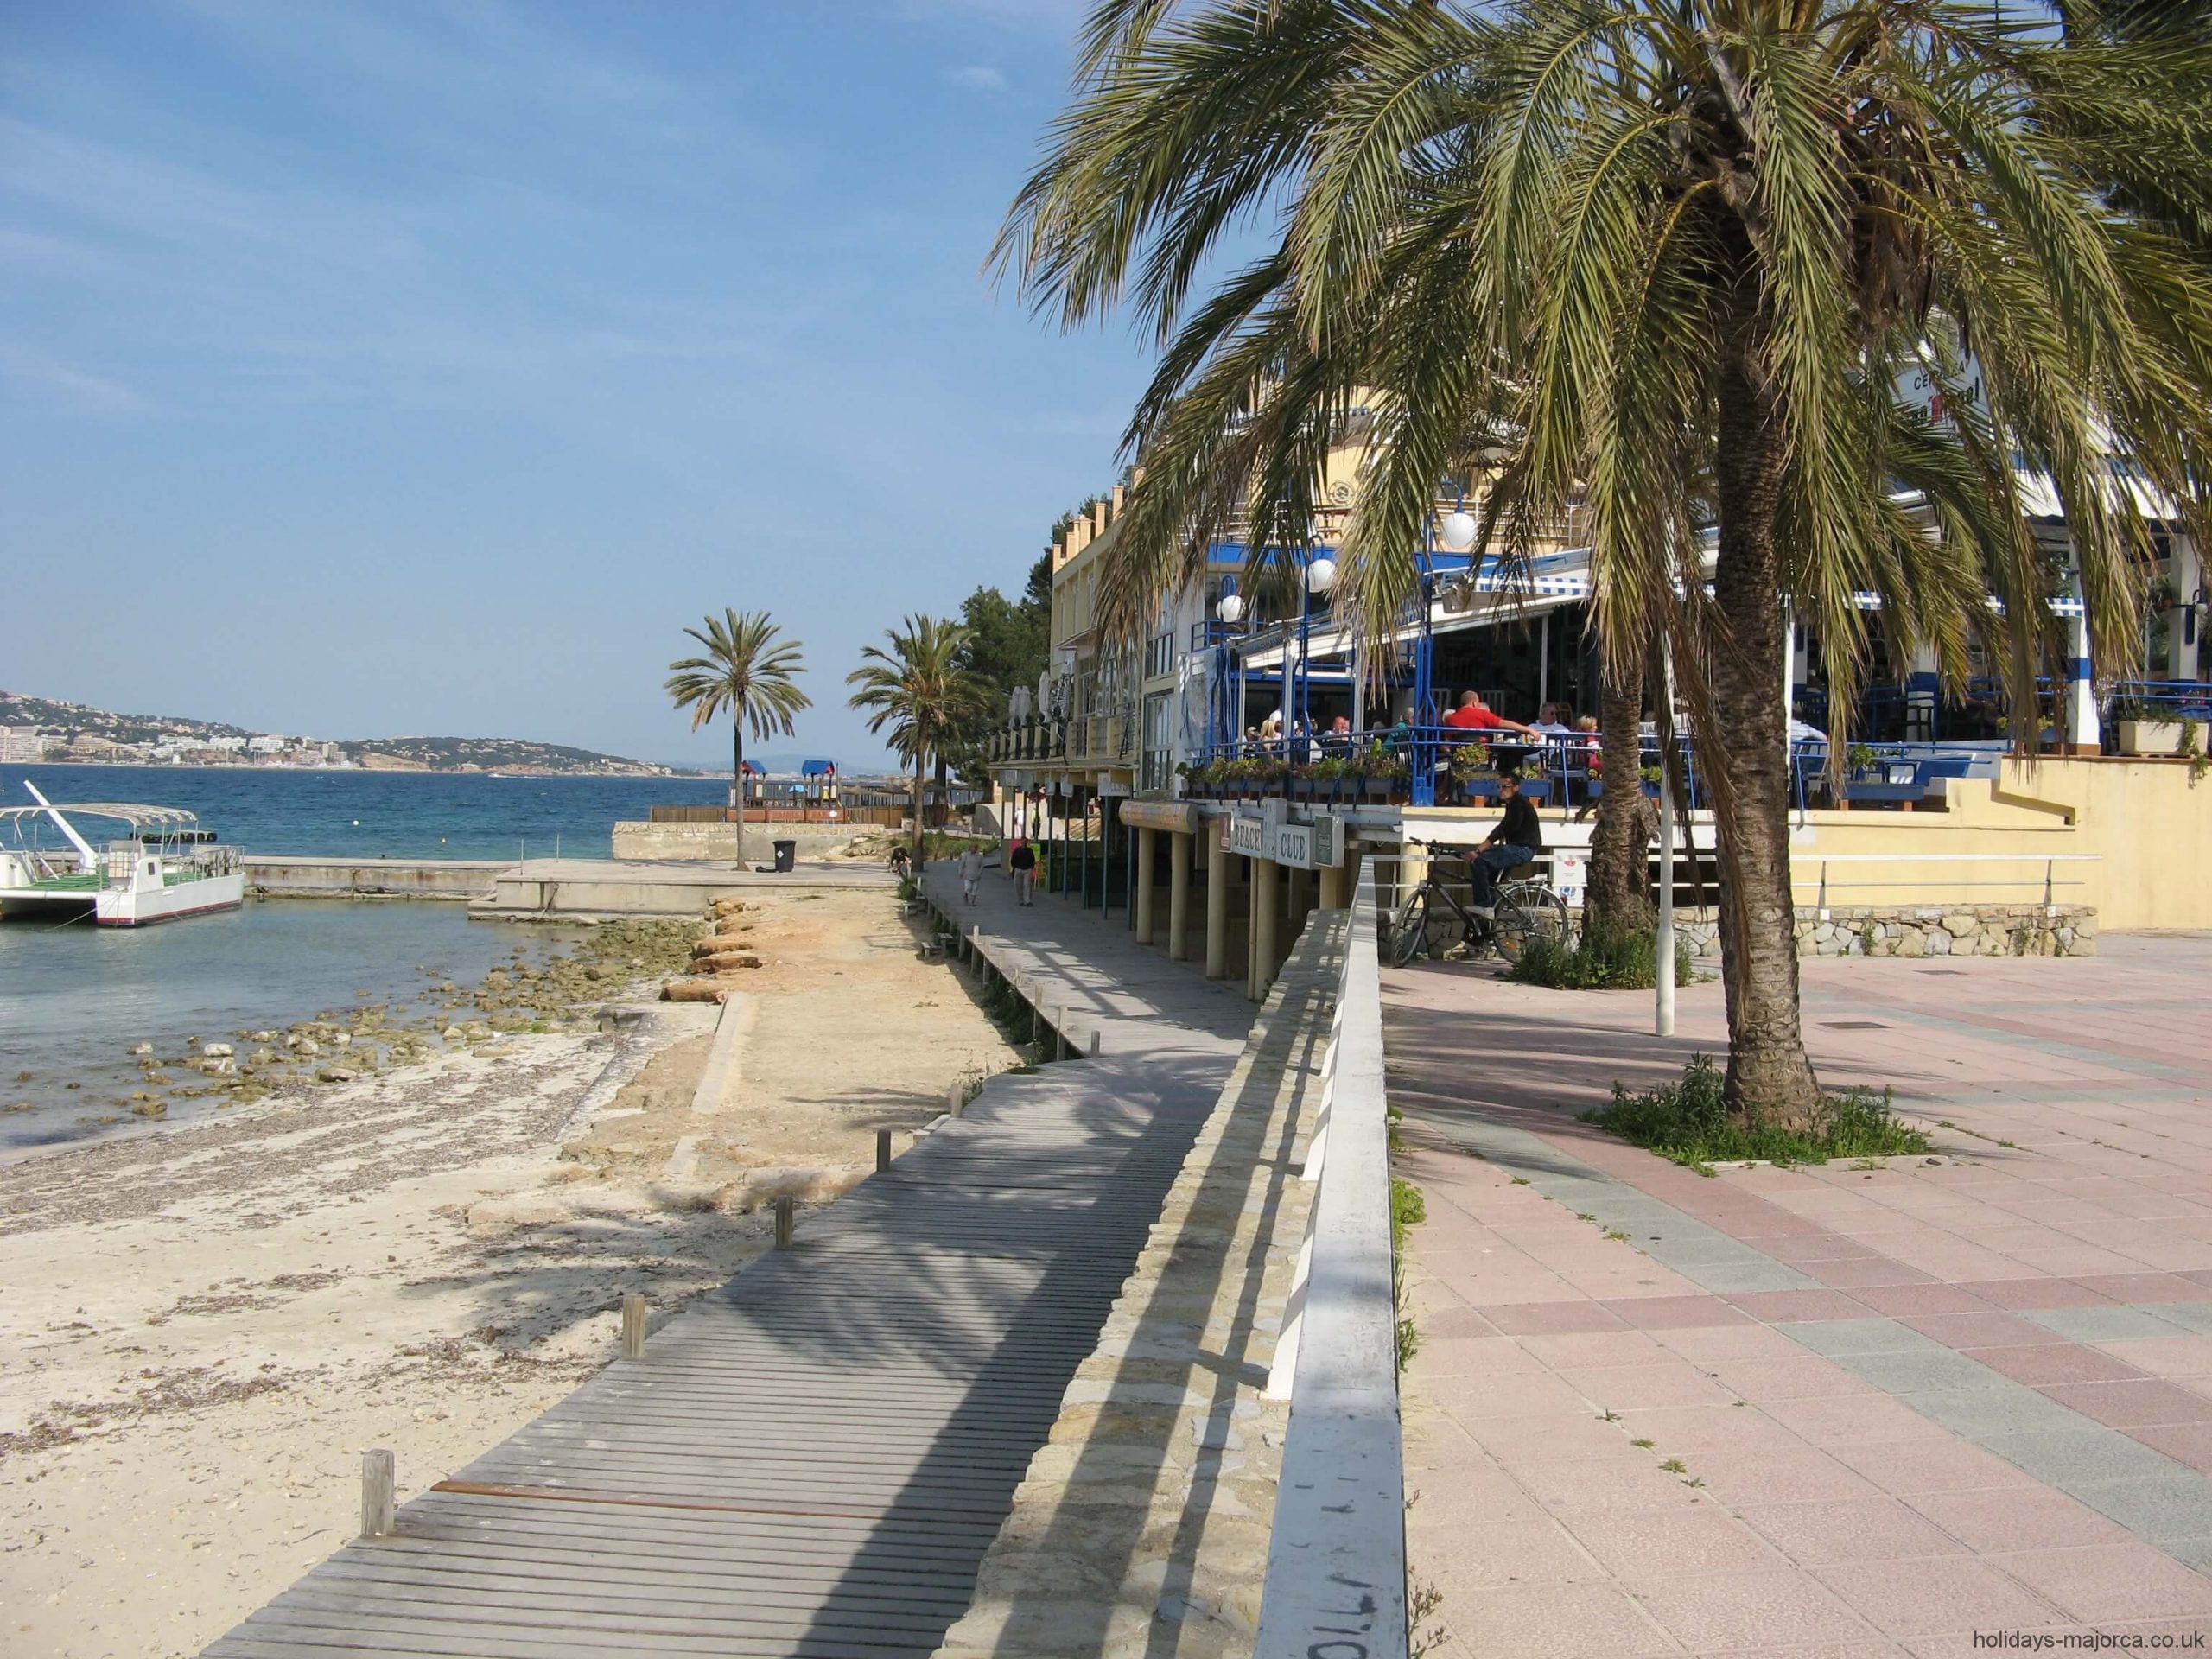 Beach gangway at Palma Nova beach Majorca